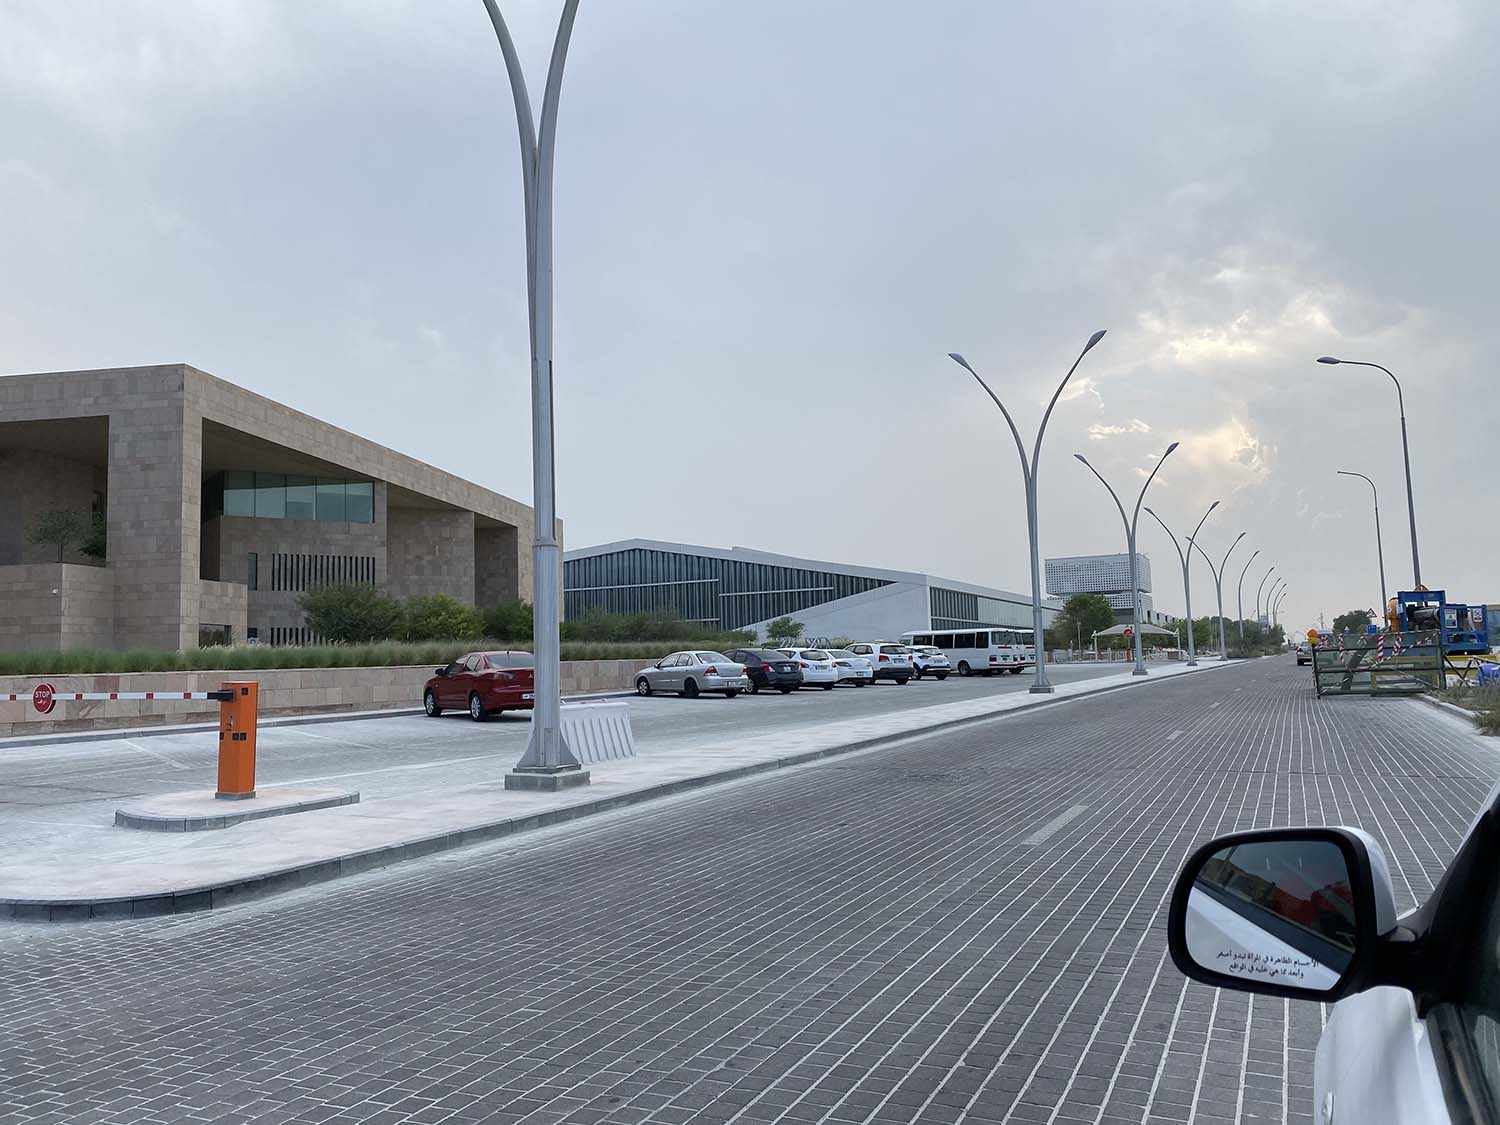 Westward view: Georgetown University in Qatar on left, Qatar National Library in center, Qatar Foundation Headquarters in background